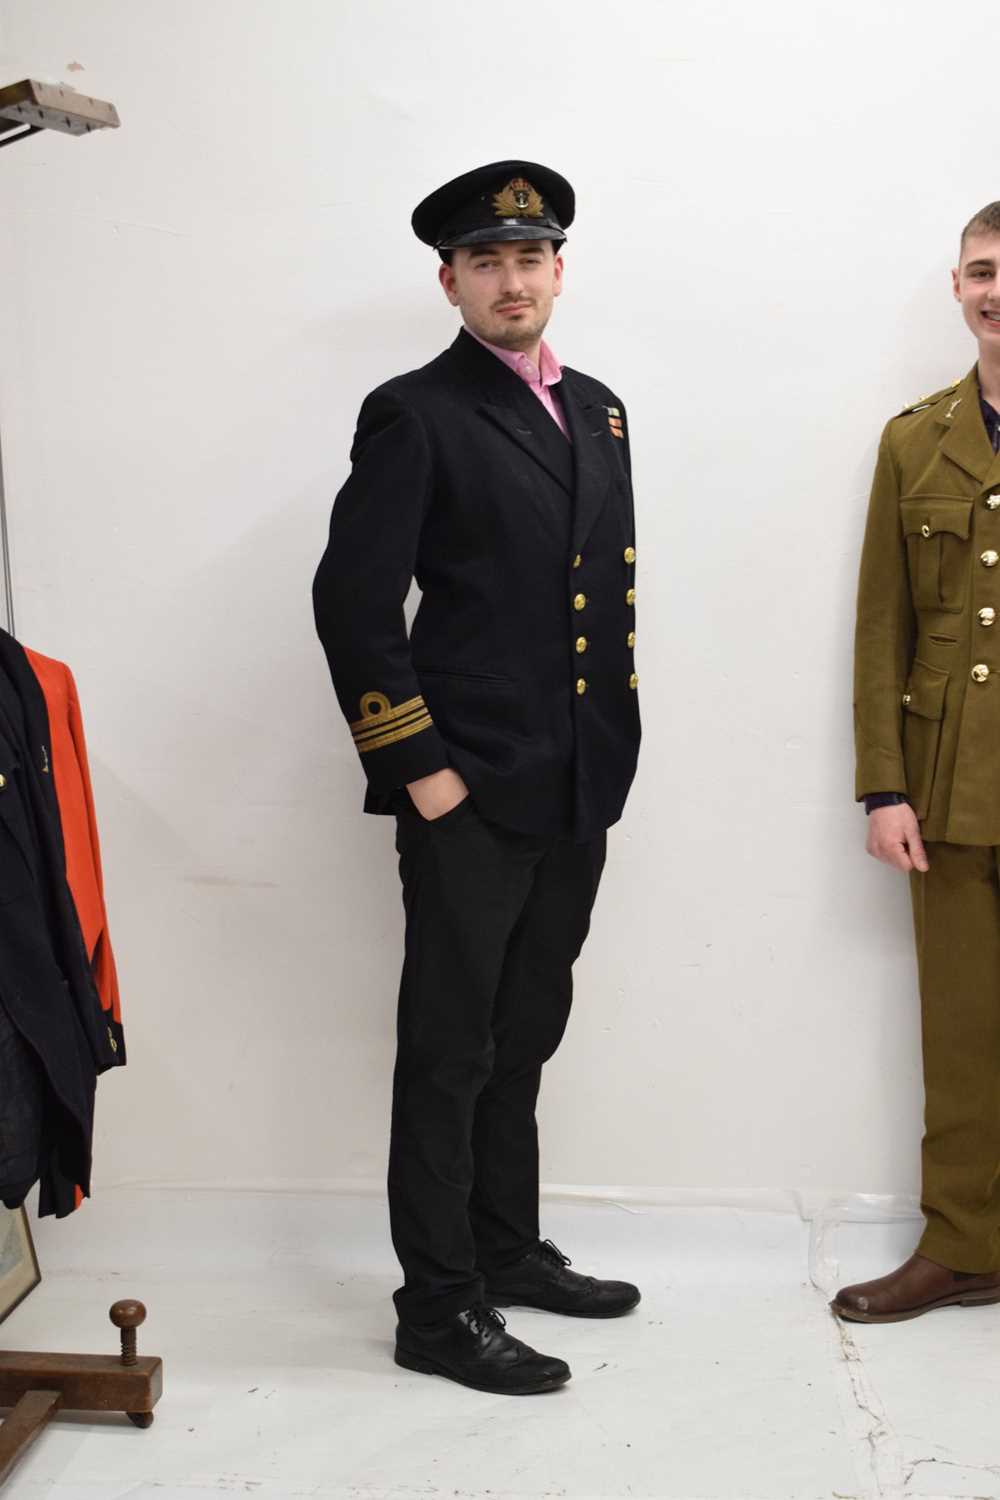 Royal Signals dress uniform circa 1950s - Image 13 of 27